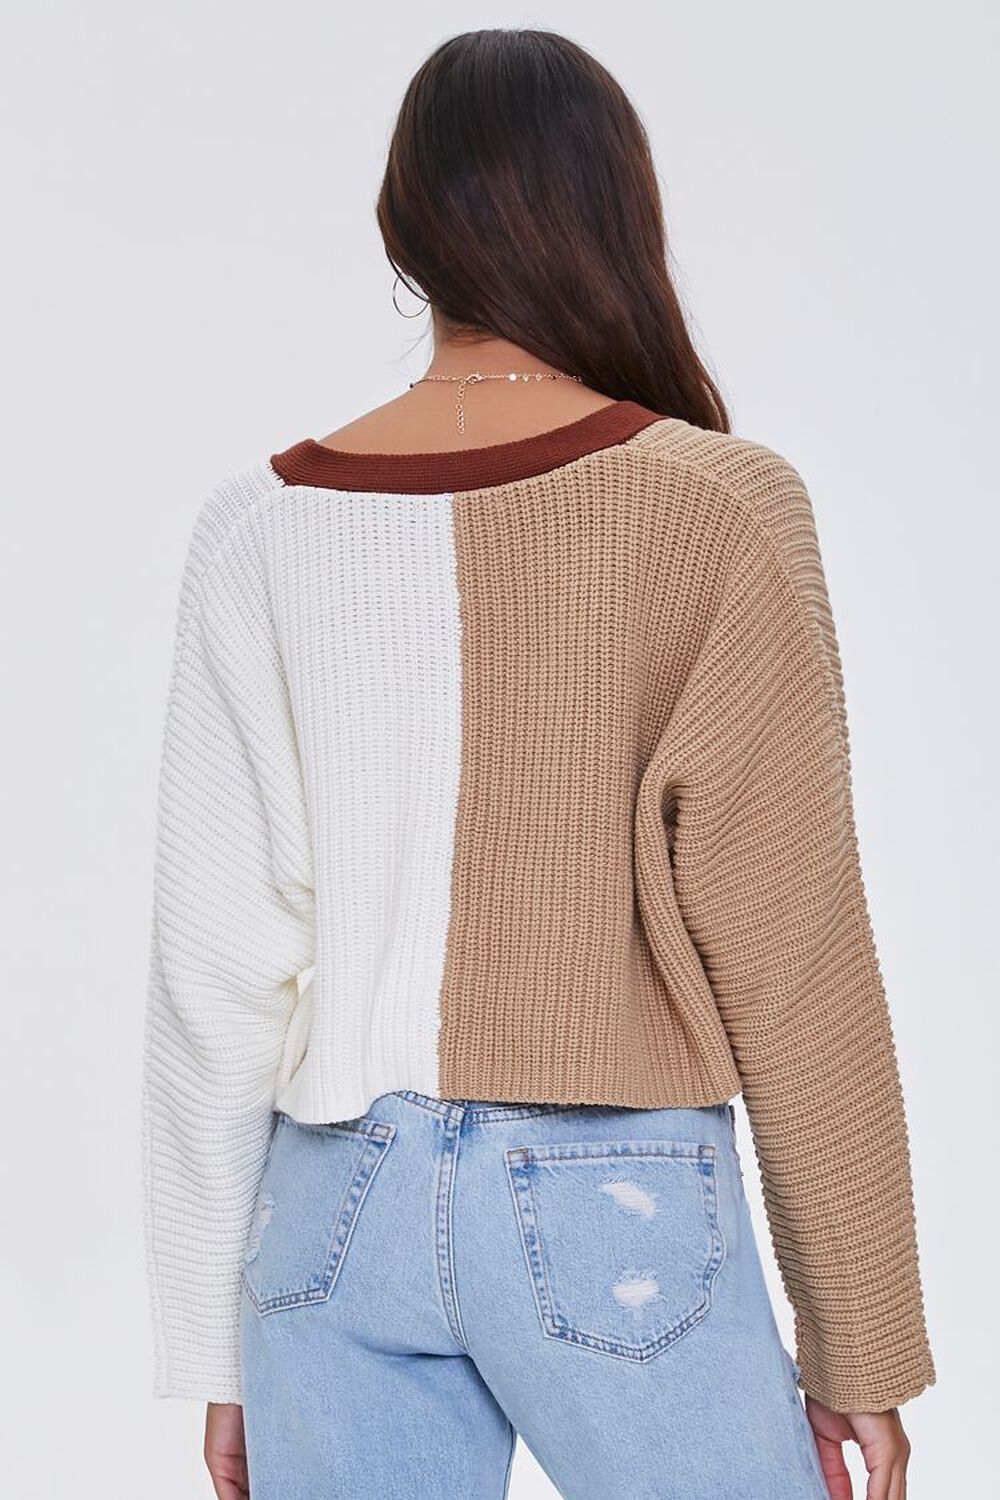 TAUPE/MULTI Cropped Colorblock Cardigan Sweater, image 3